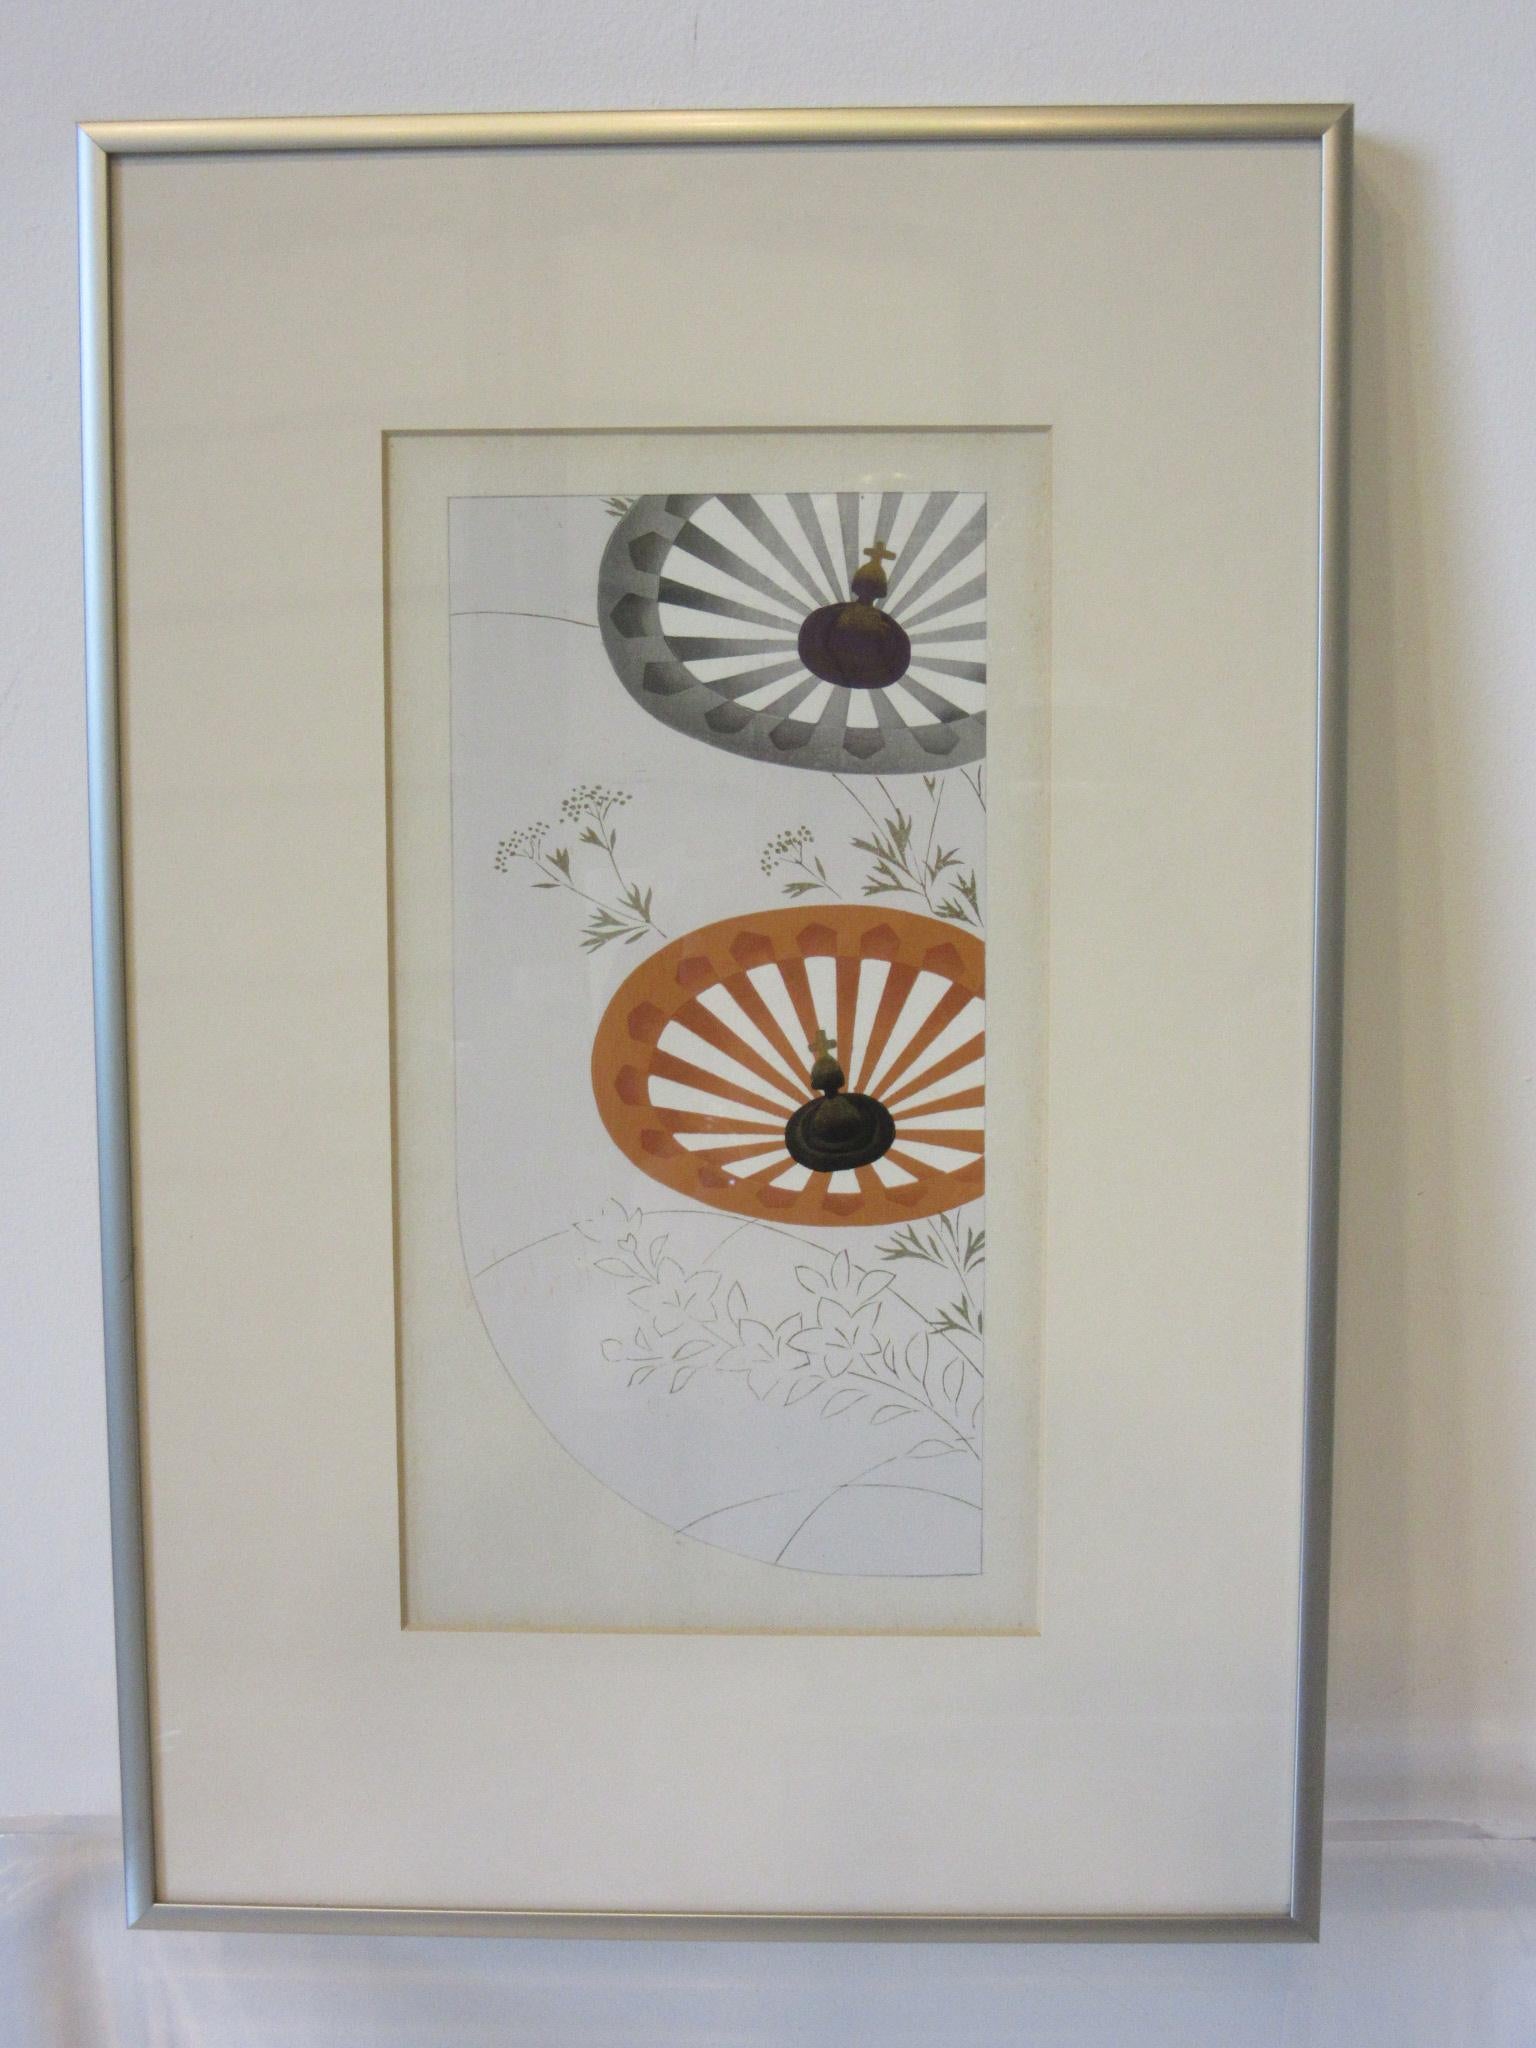 Paper Japanese Art Deco Styled Woodblock Prints by Jun Hisatomi & Tamaki Yoshida